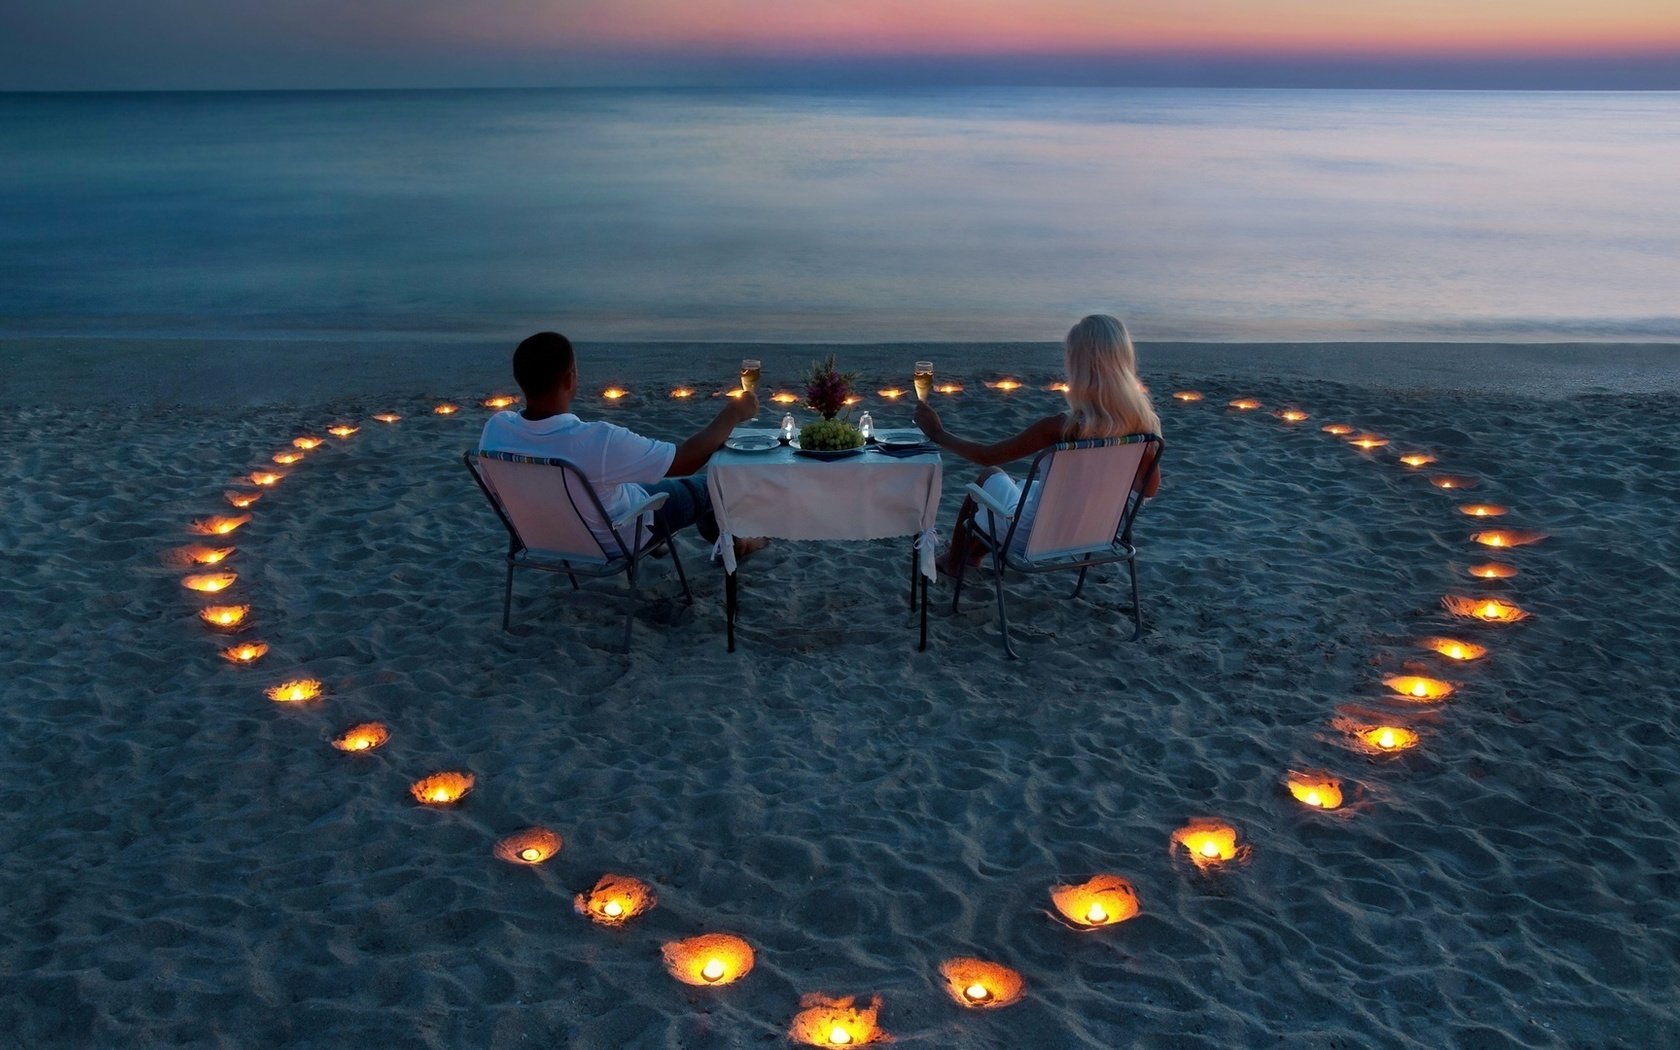 Обои мужчина и женщина пьют вино на берегу, свечи на песке в форме сердца, man and woman drinking wine on the shore, candles on the sand in the shape of a heart разрешение 1920x1080 Загрузить